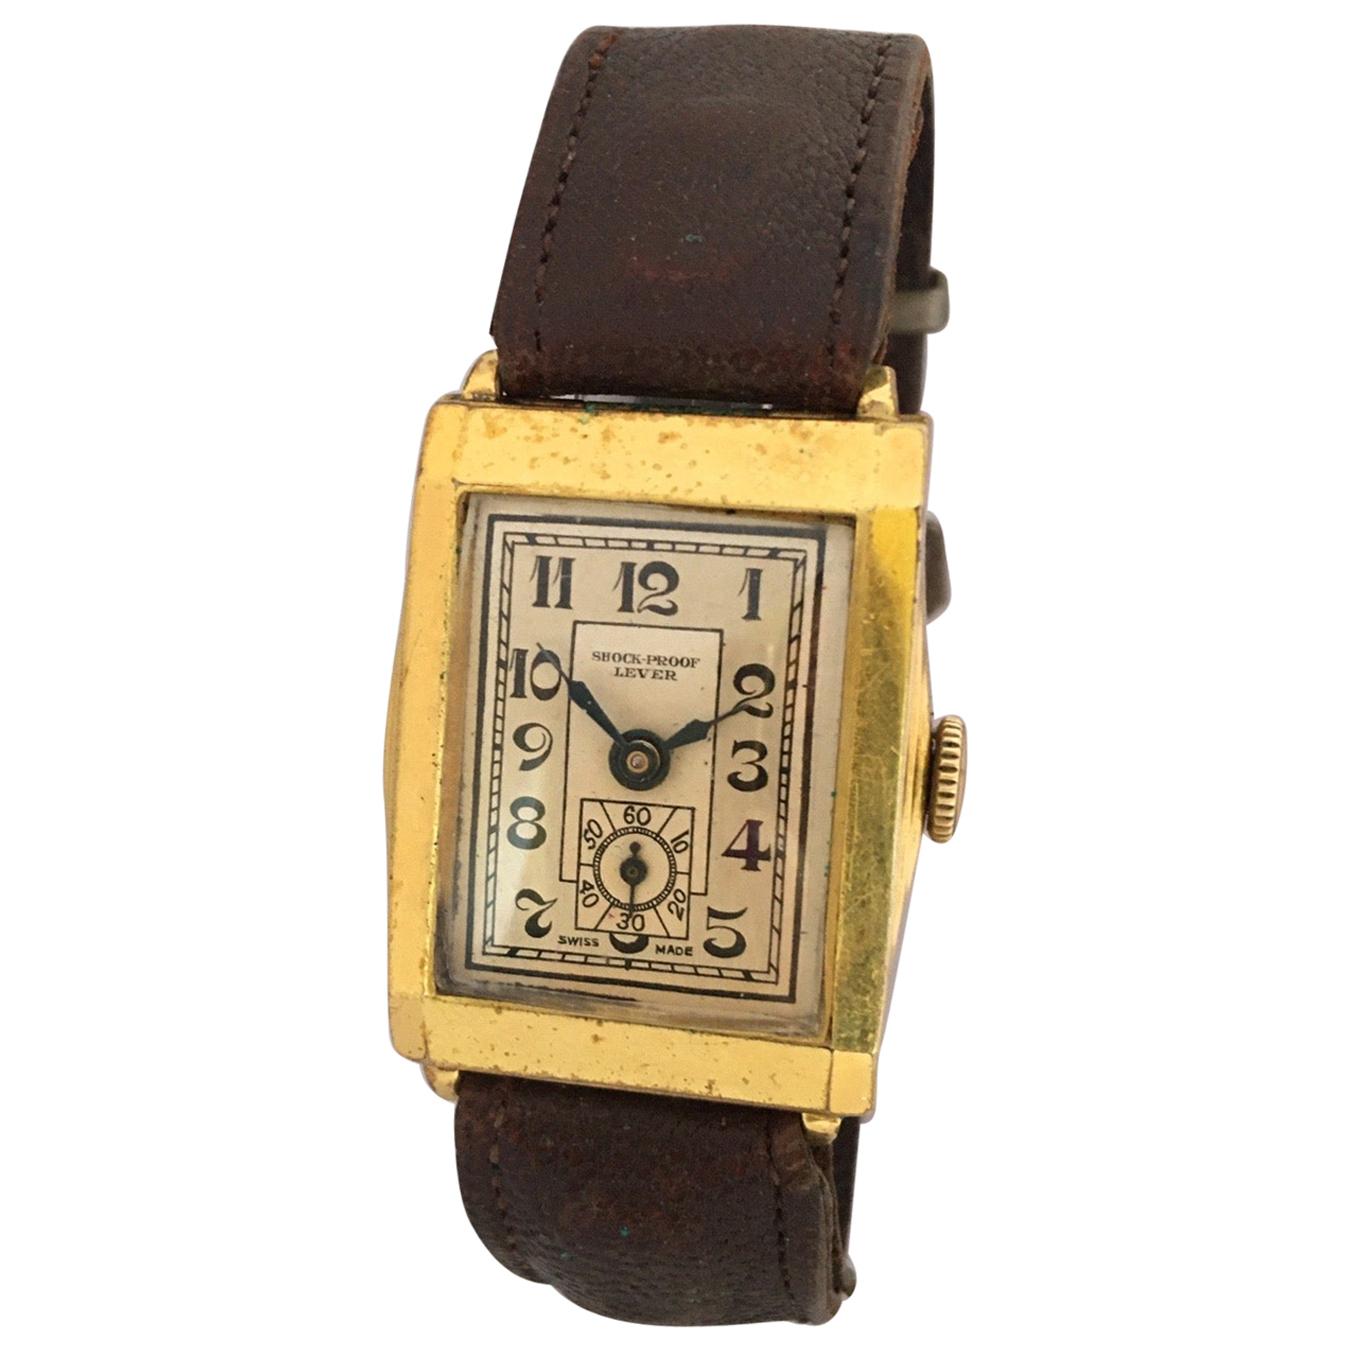 Vintage 1930s Gold-Plated Rectangular Swiss Mechanical Watch